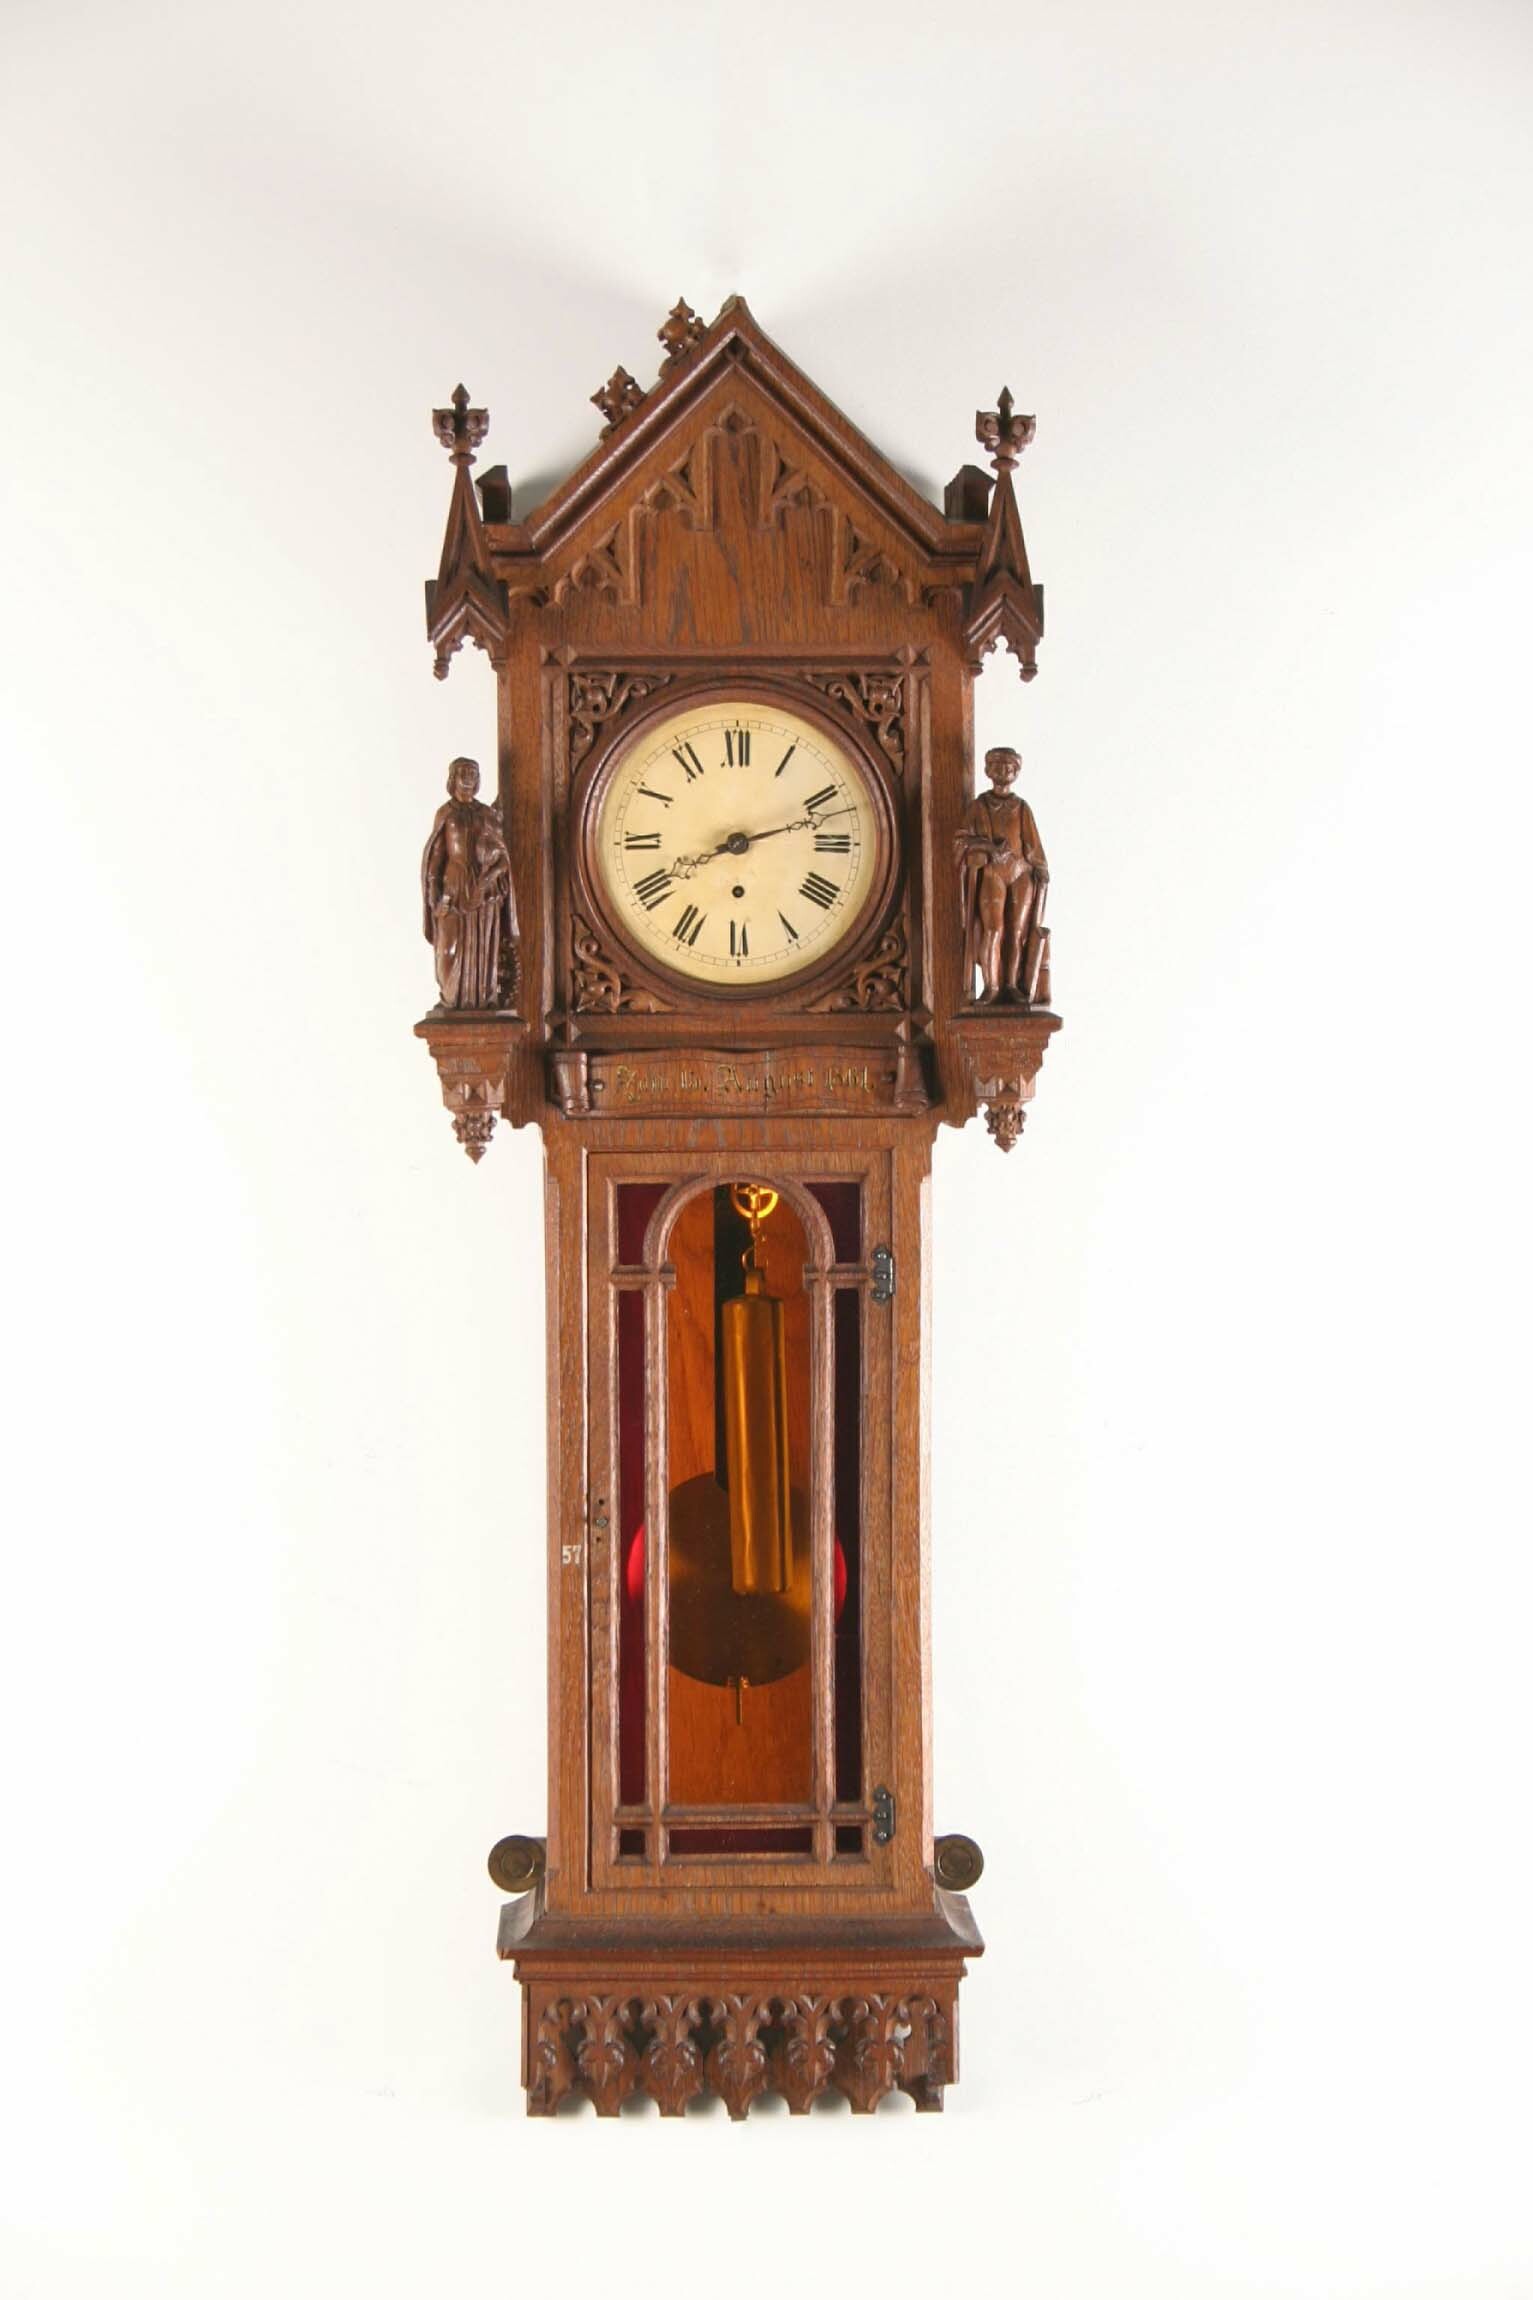 Regulator, Uhrmacherschule Furtwangen, 1861 (Deutsches Uhrenmuseum CC BY-SA)